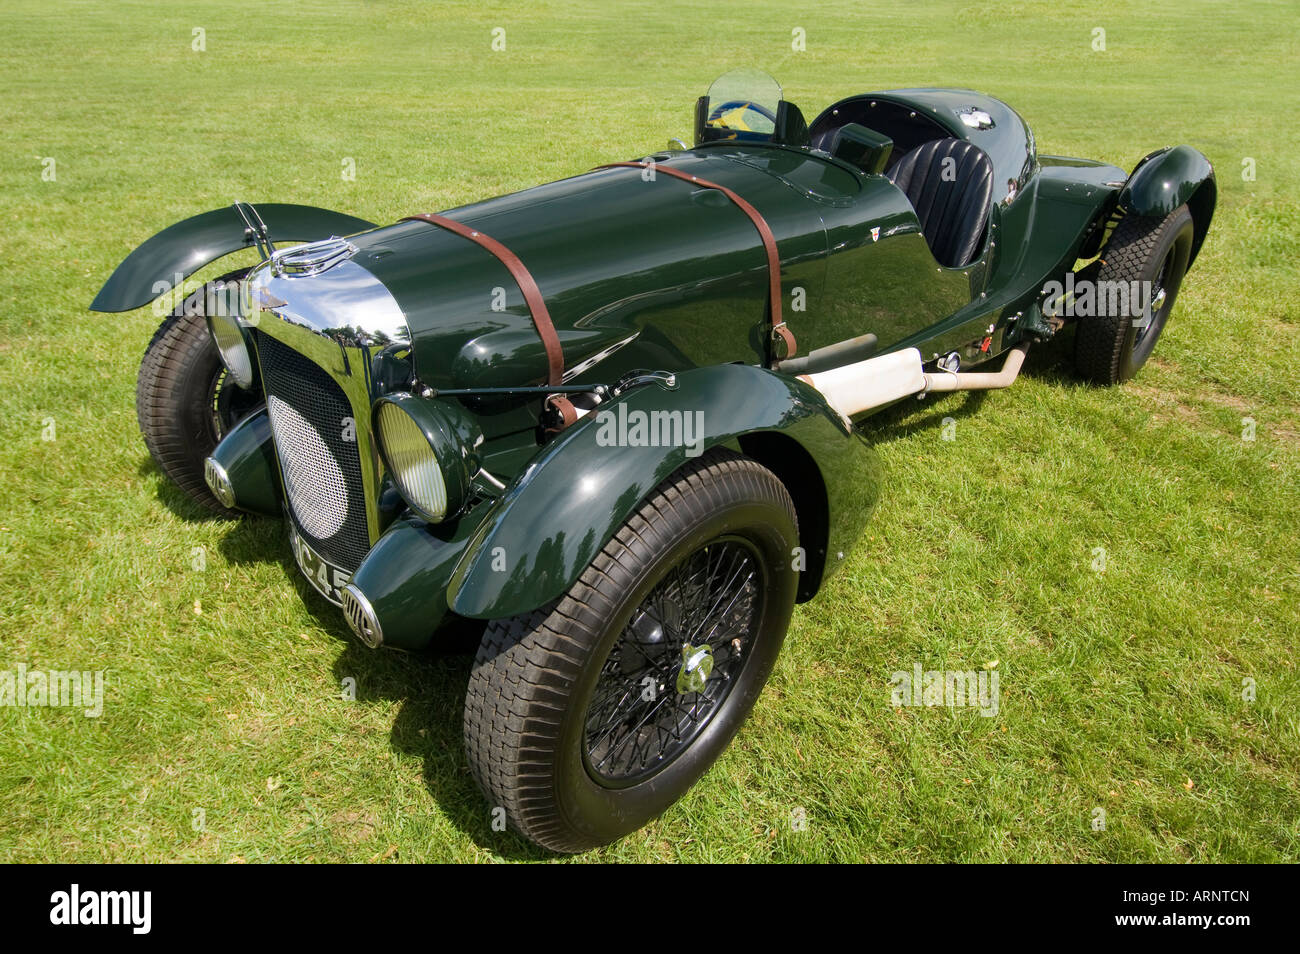 Un British Racing Green historique 1939 Lagonda V12 Le Mans motor car se tenait sur l'herbe Banque D'Images